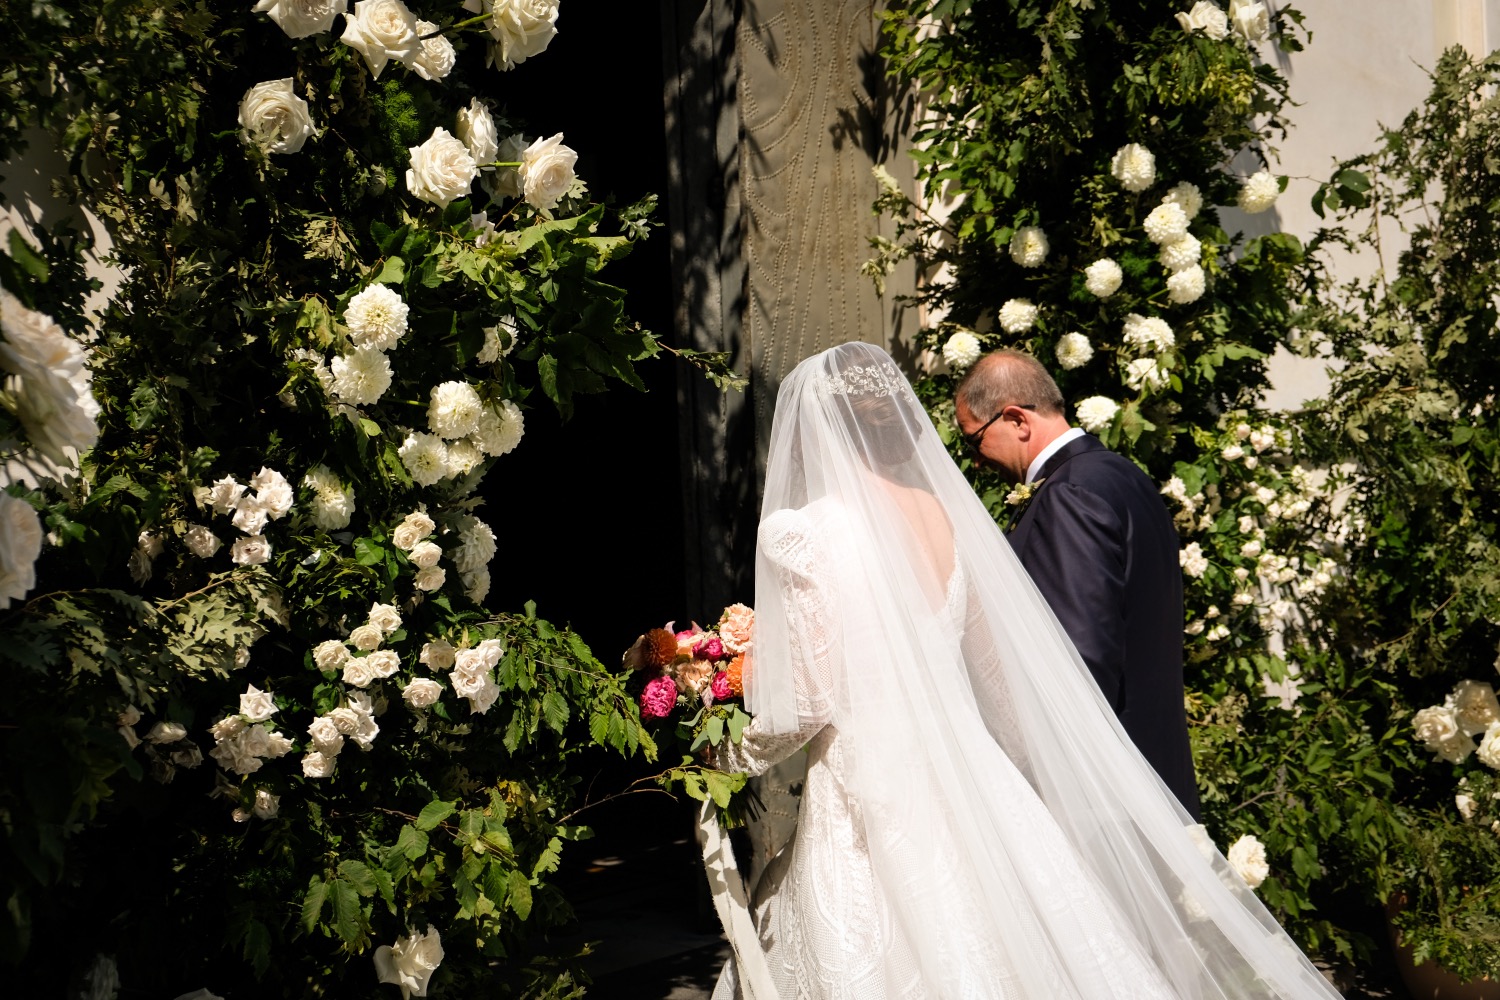 wedding in Sorrento